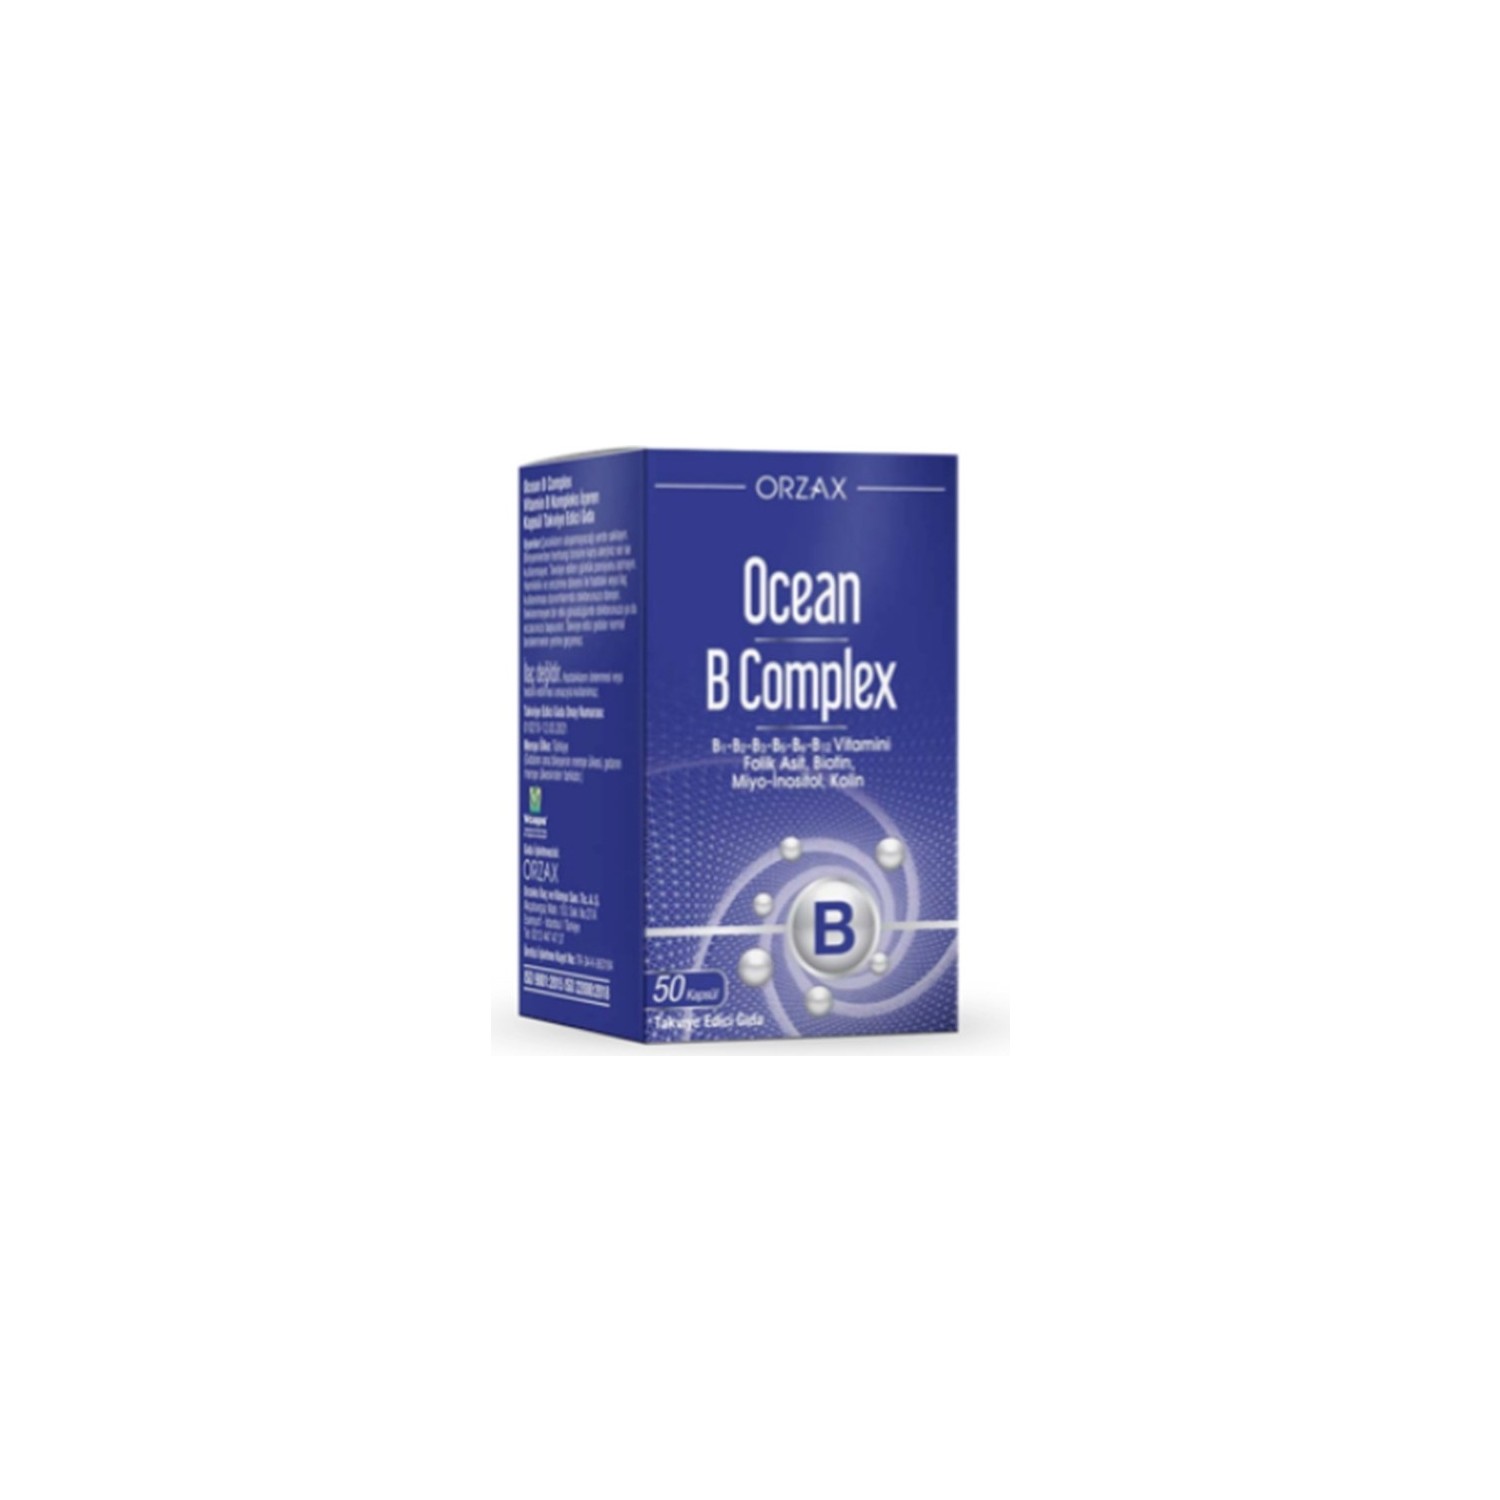 Комплекс добавок Orzax Ocean B, 50 капсул комплекс добавок orzax ocean b complex supplementary food 50 капсул